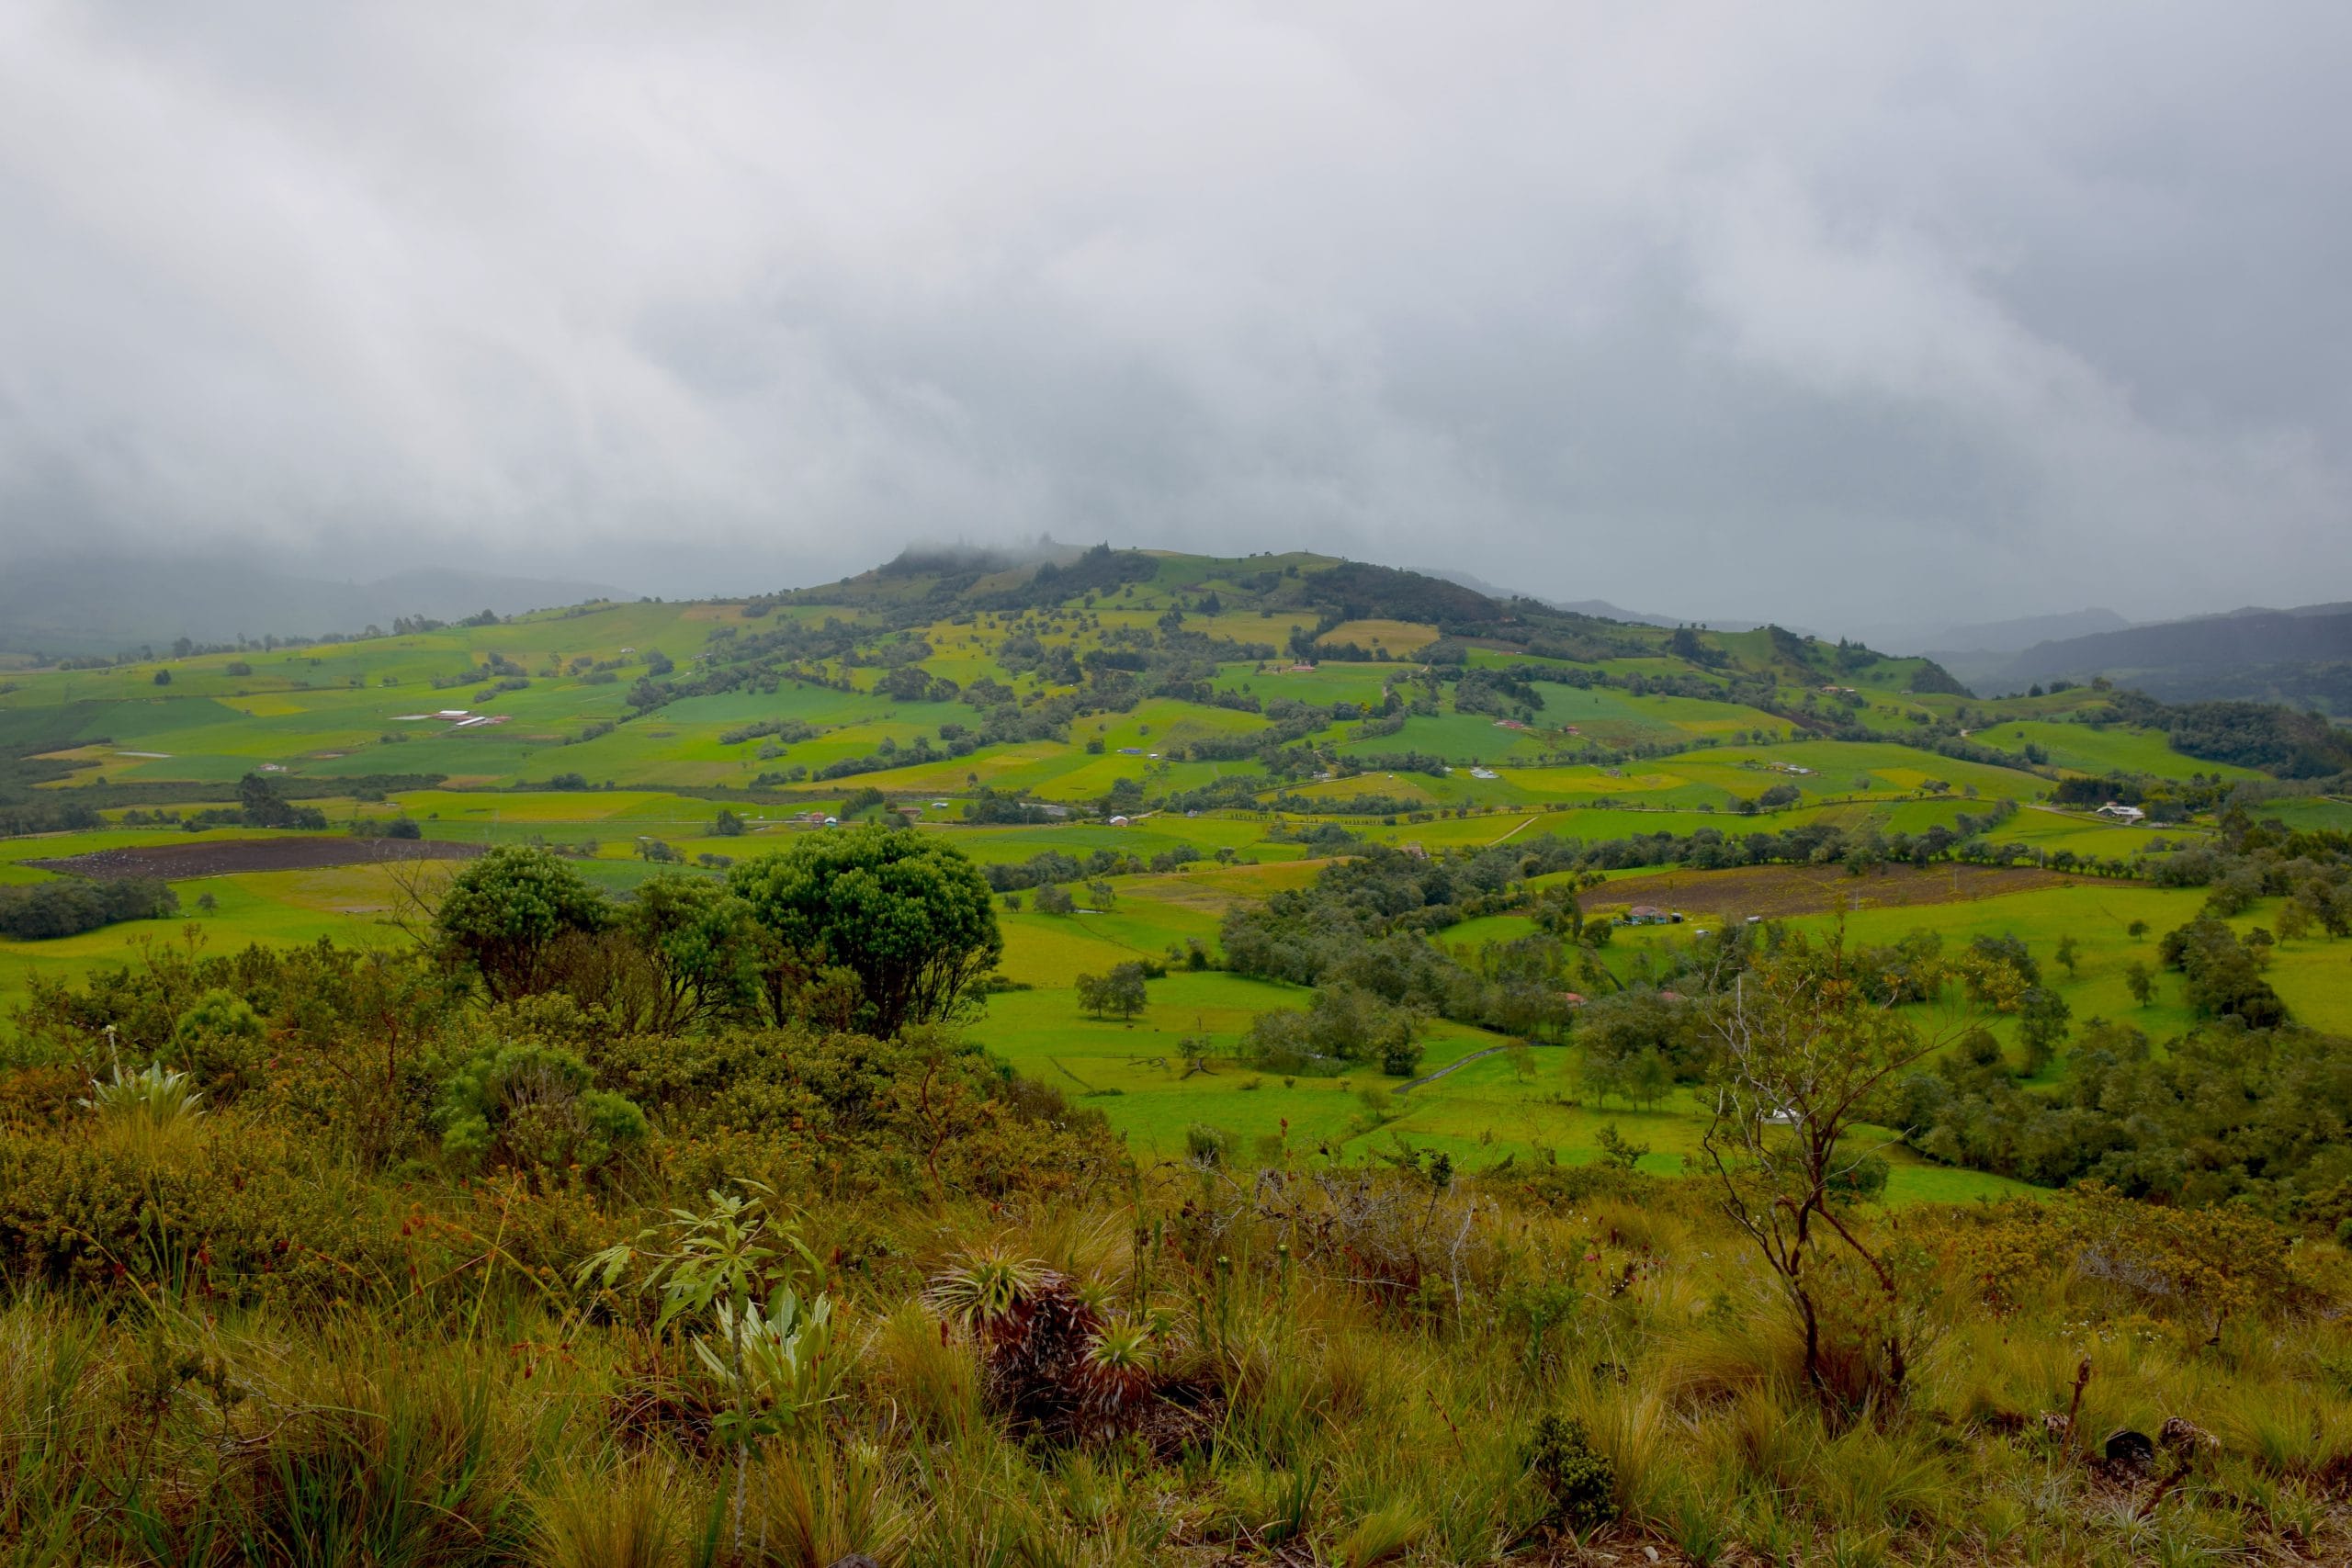 Muisca terrain today, seen on the climb to Lake Guatavita